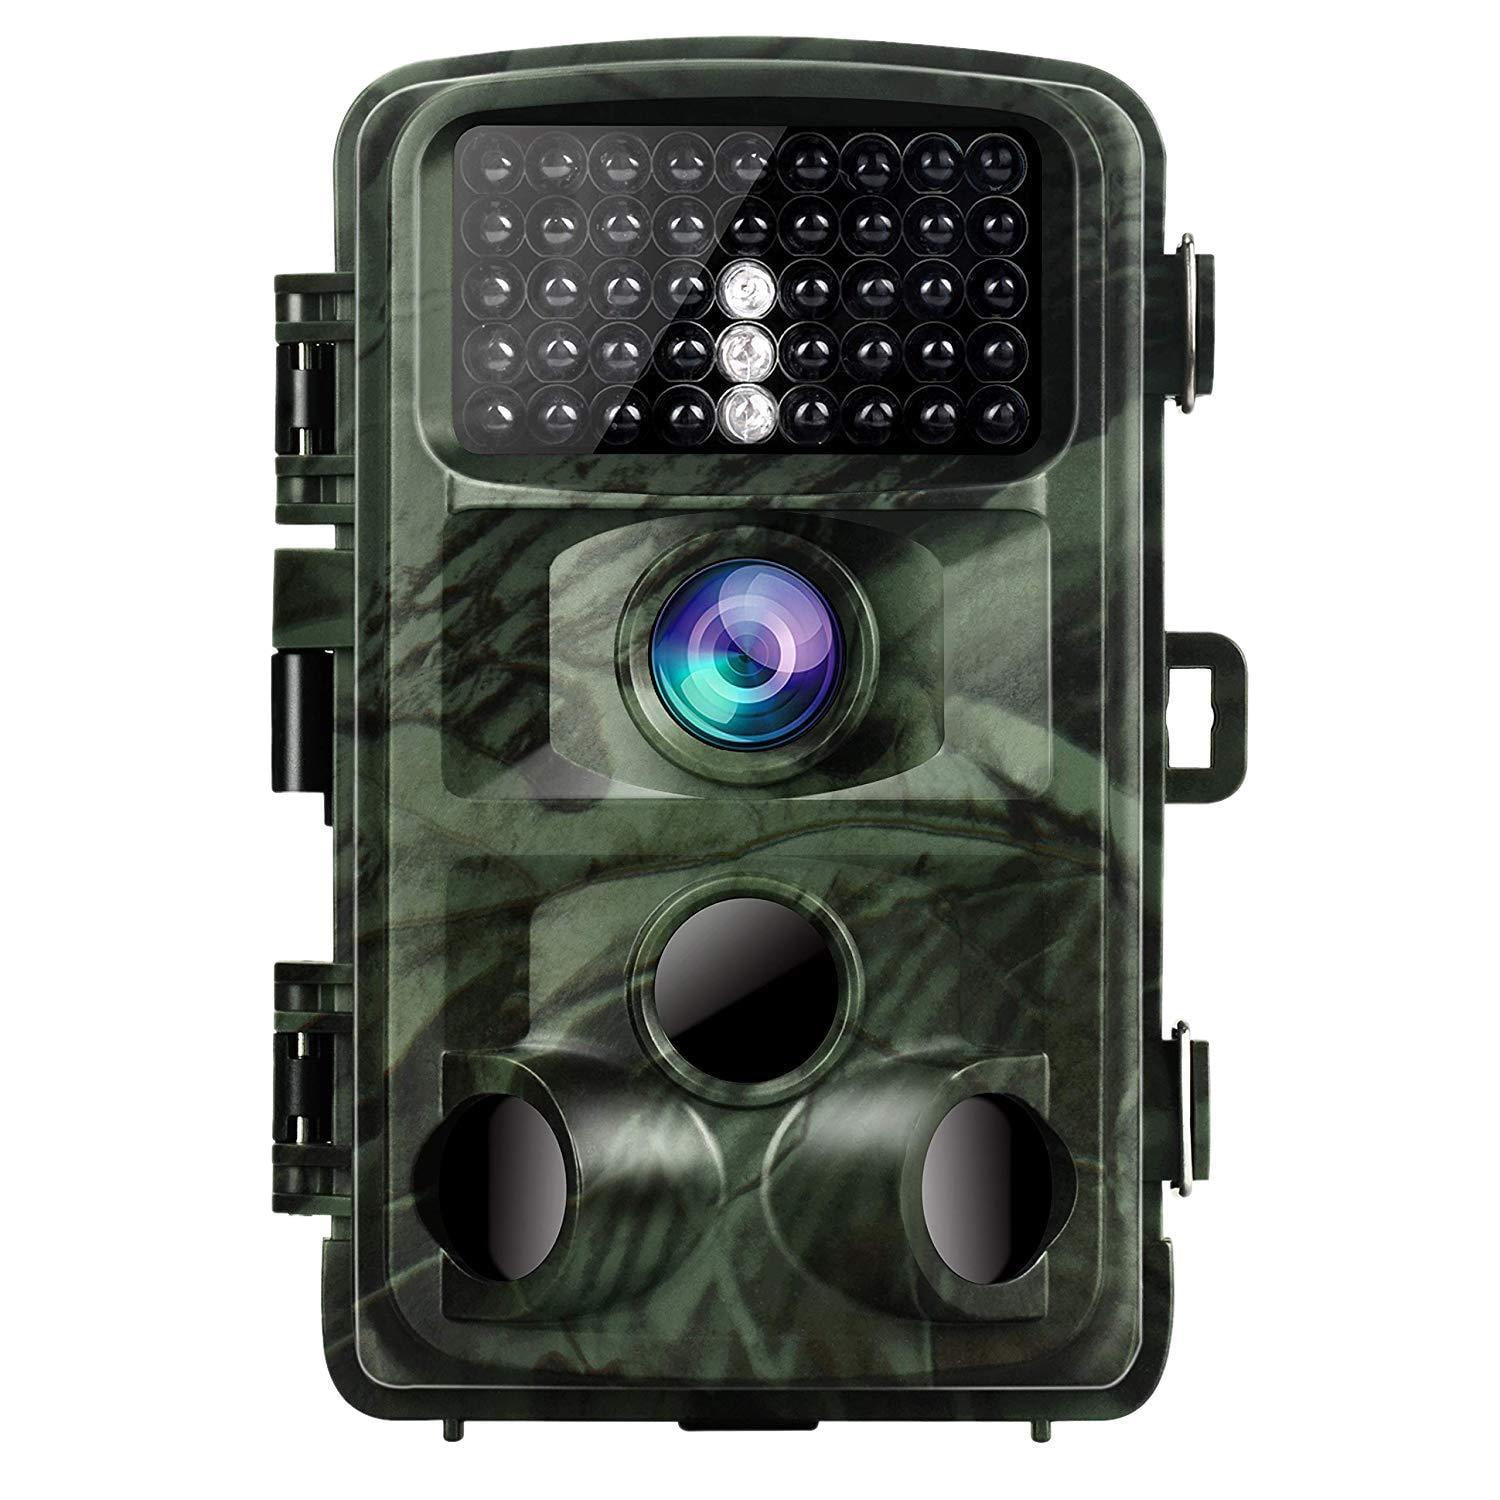 TOGUARD Trail Camera 14MP 1080P Game Wild Hunting Cam IR Night Vision Waterproof 